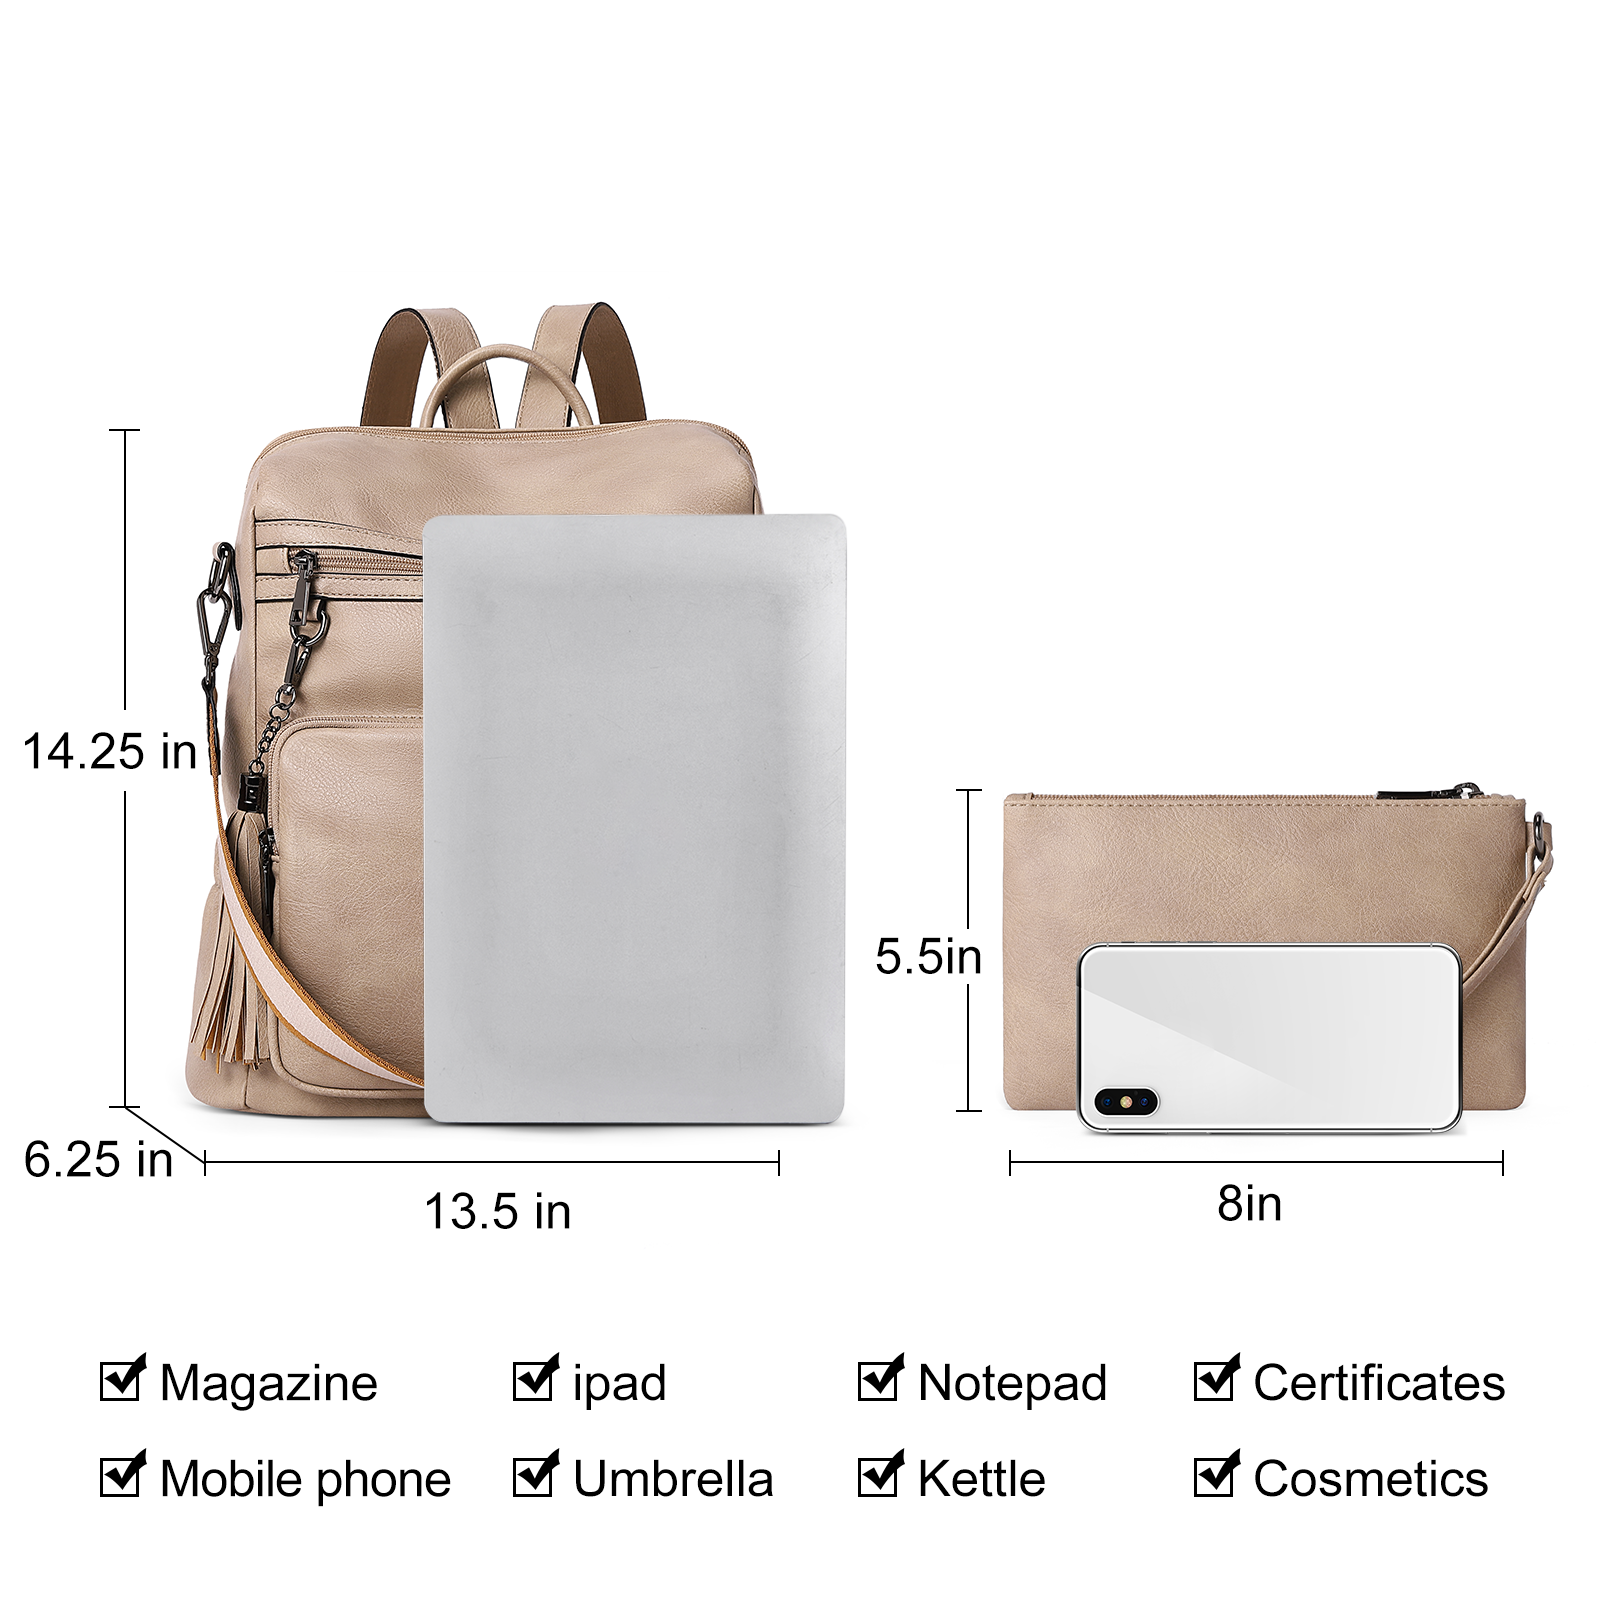 Mobile Edge Black Backpack Purse Bag Handbag Tablet iPad Accessories Carry  | eBay